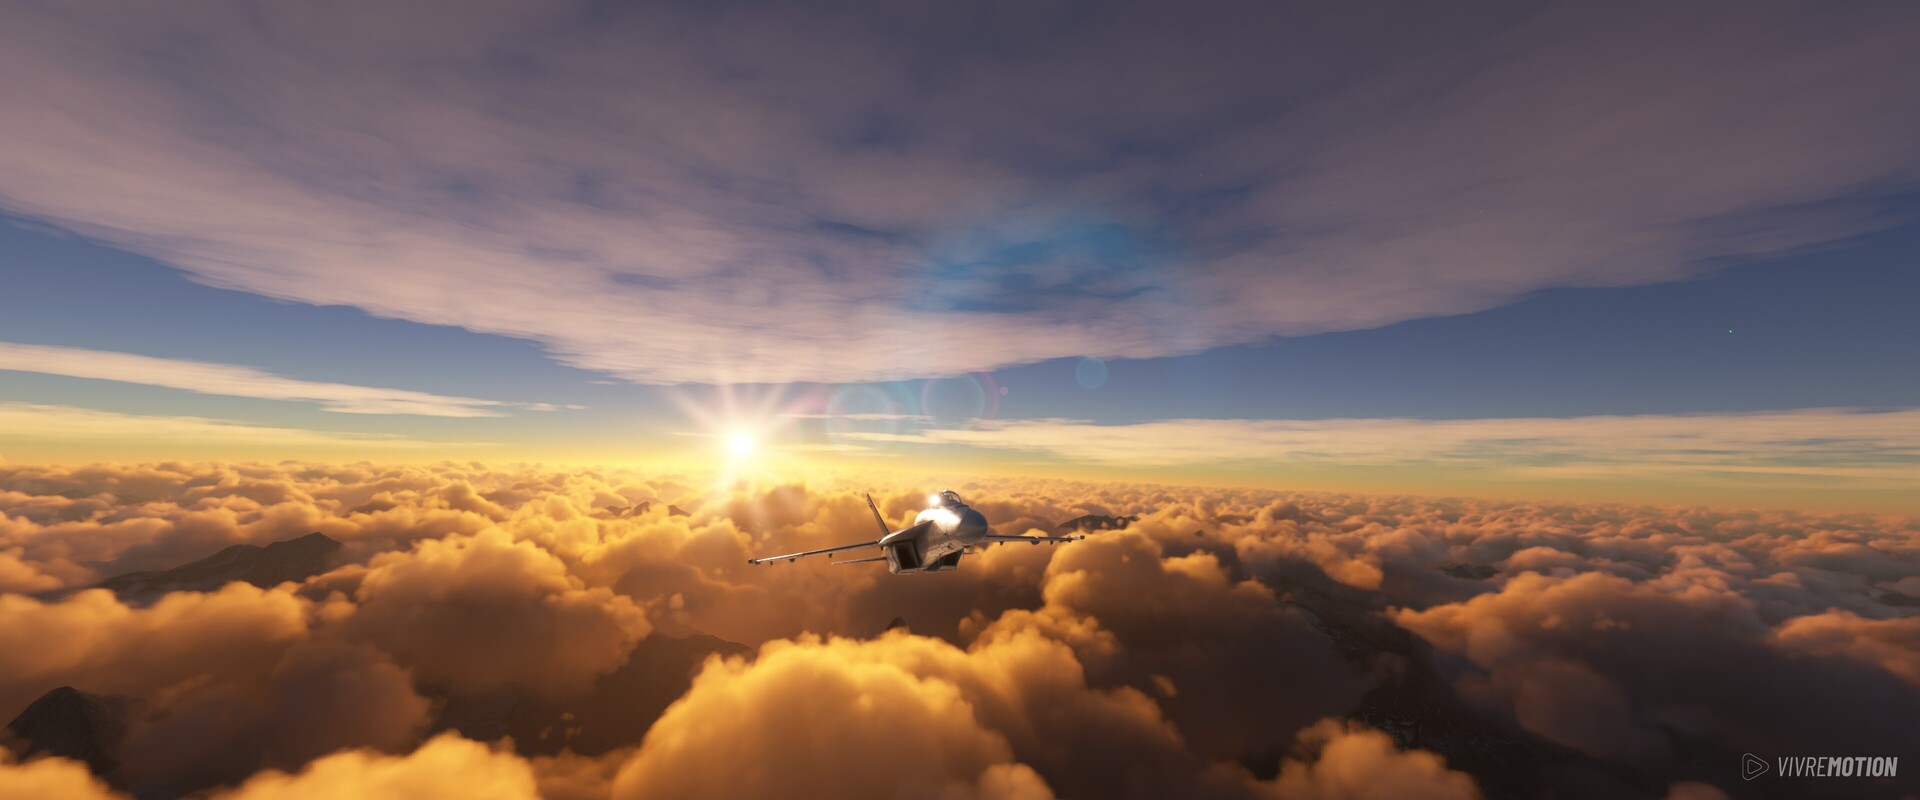 Over the Clouds - Boeing F/A-18 Super Hornet - Microsoft Flight Simulator - VIVRE-MOTION